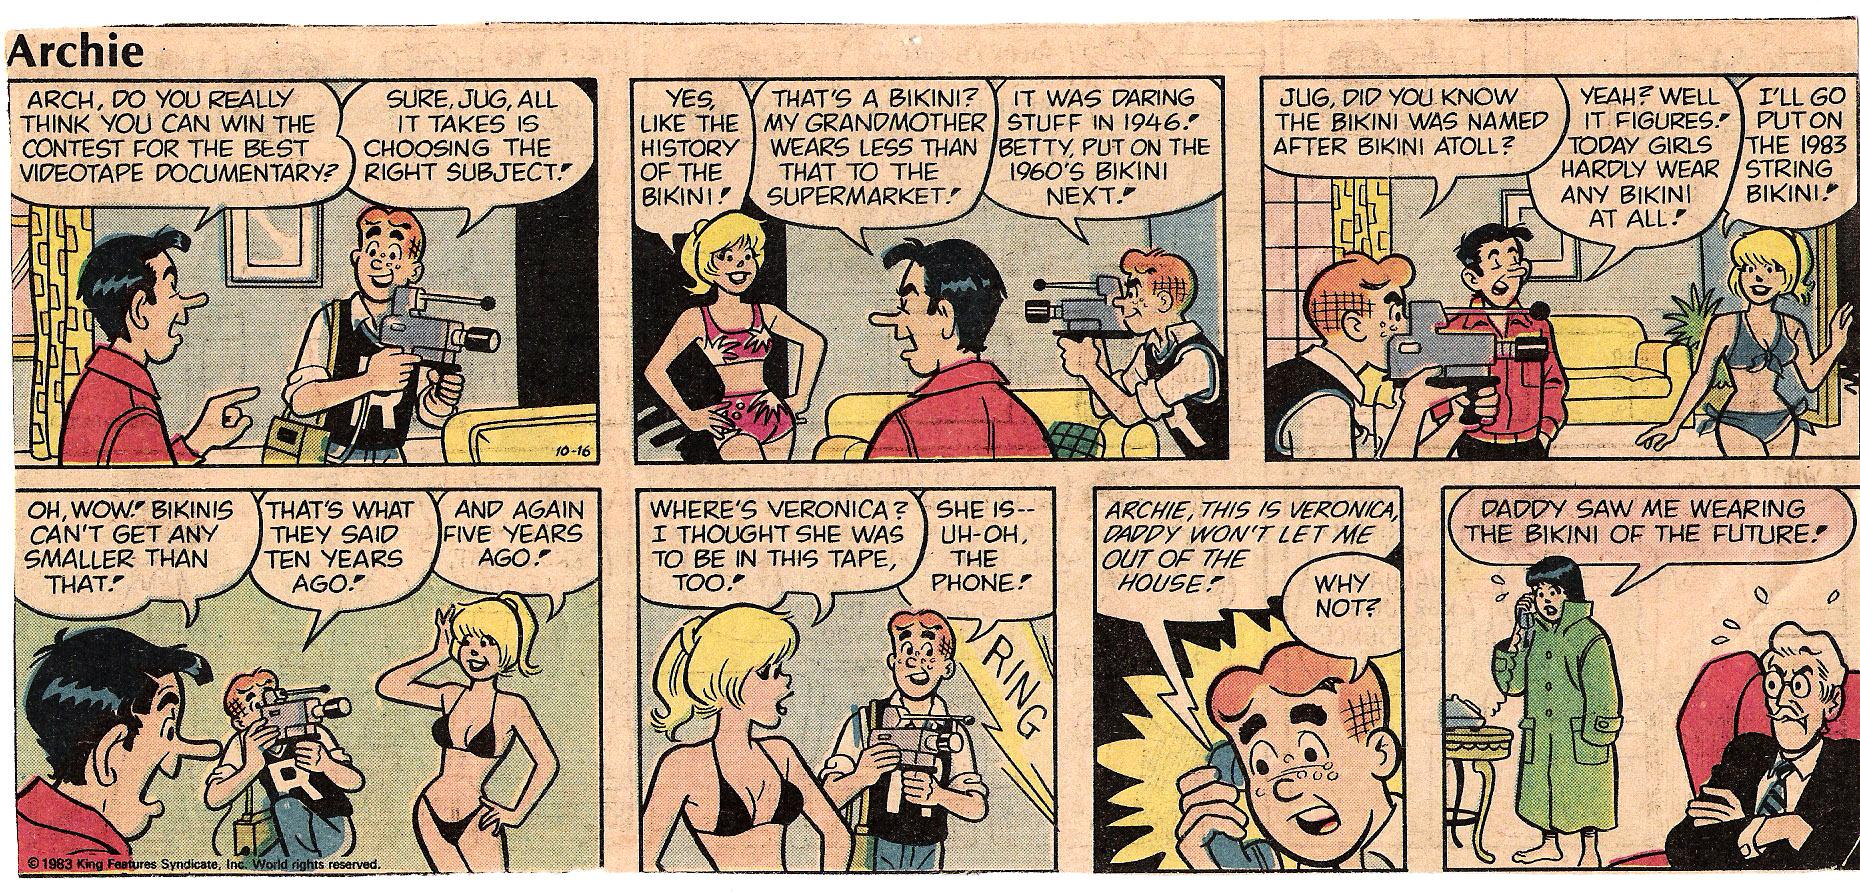 Archie 1983 Bikini of the future